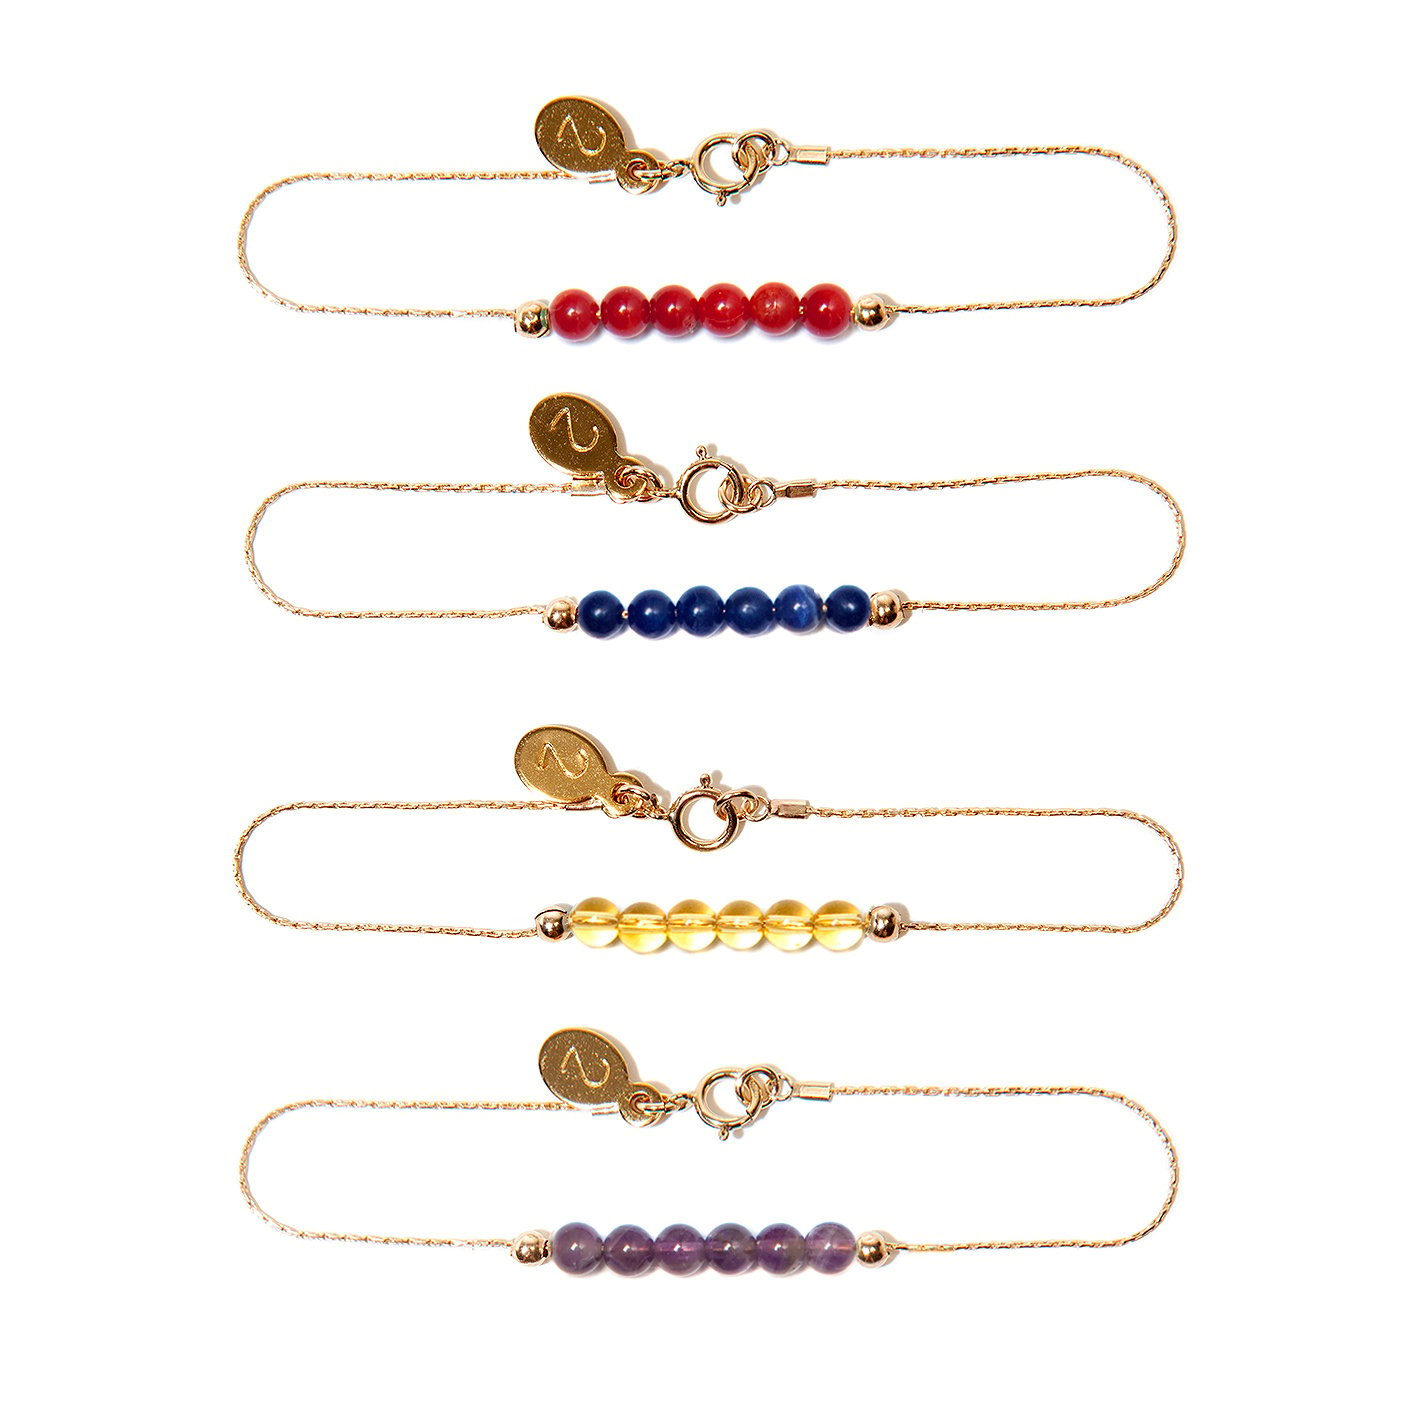 Image of "Petite Ami" Bracelets - 14 Carat Gold